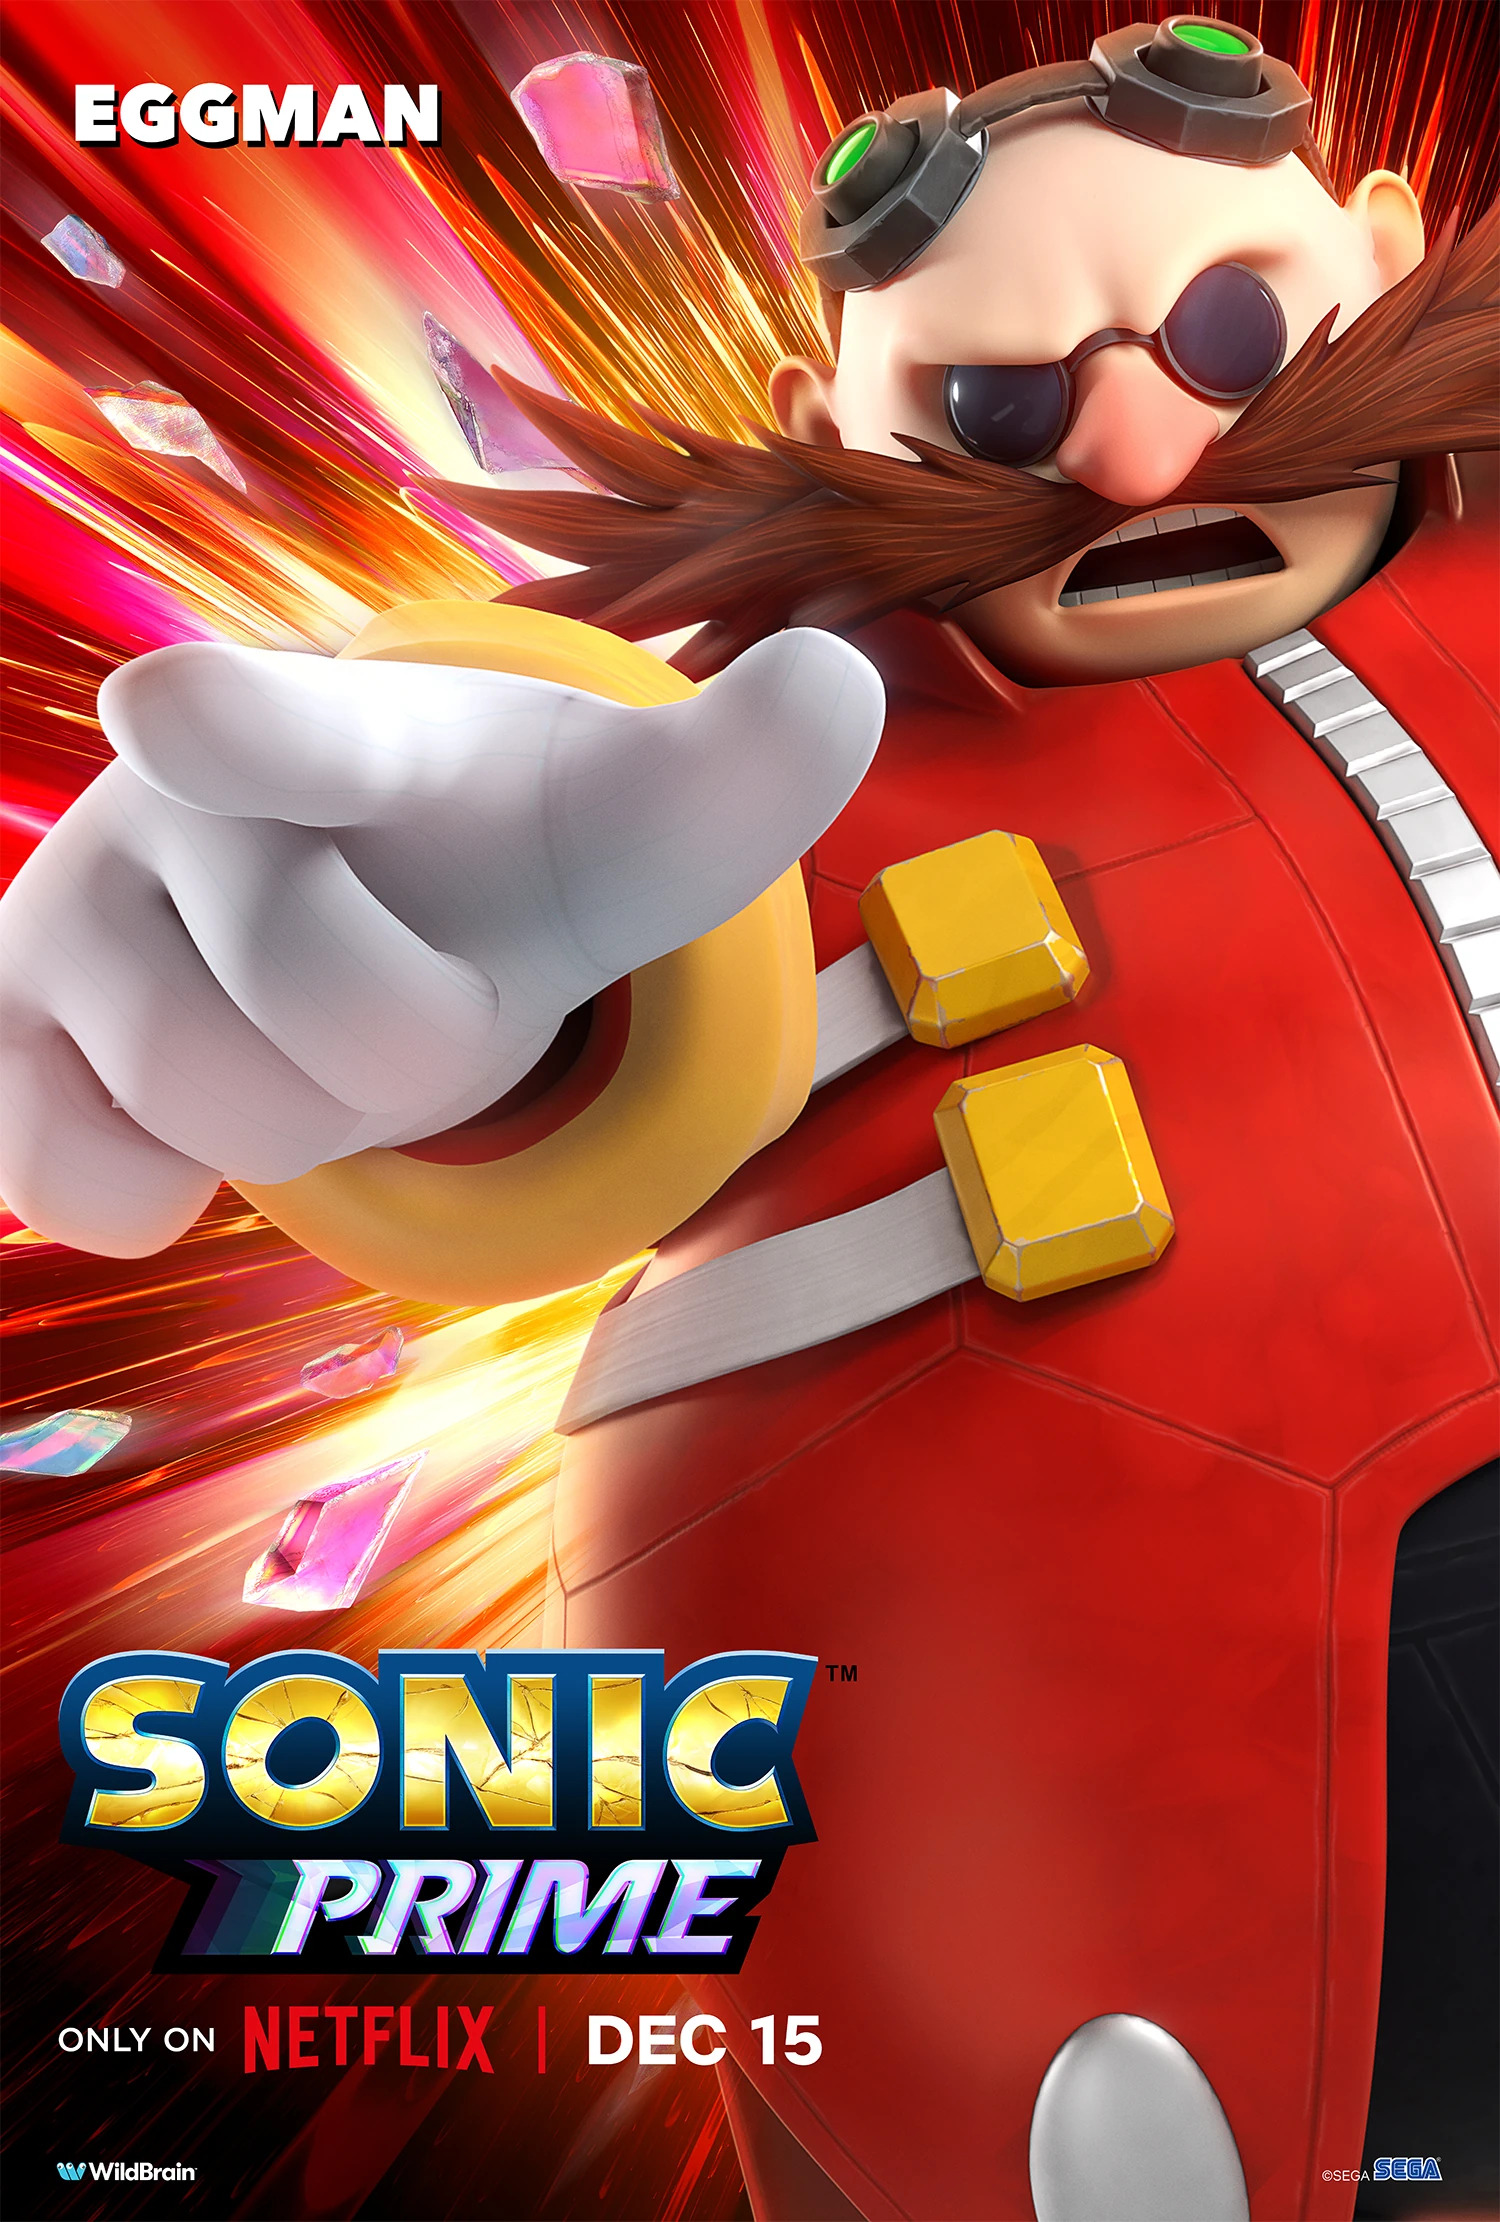 Mega Sized TV Poster Image for Sonic Prime (#4 of 9)